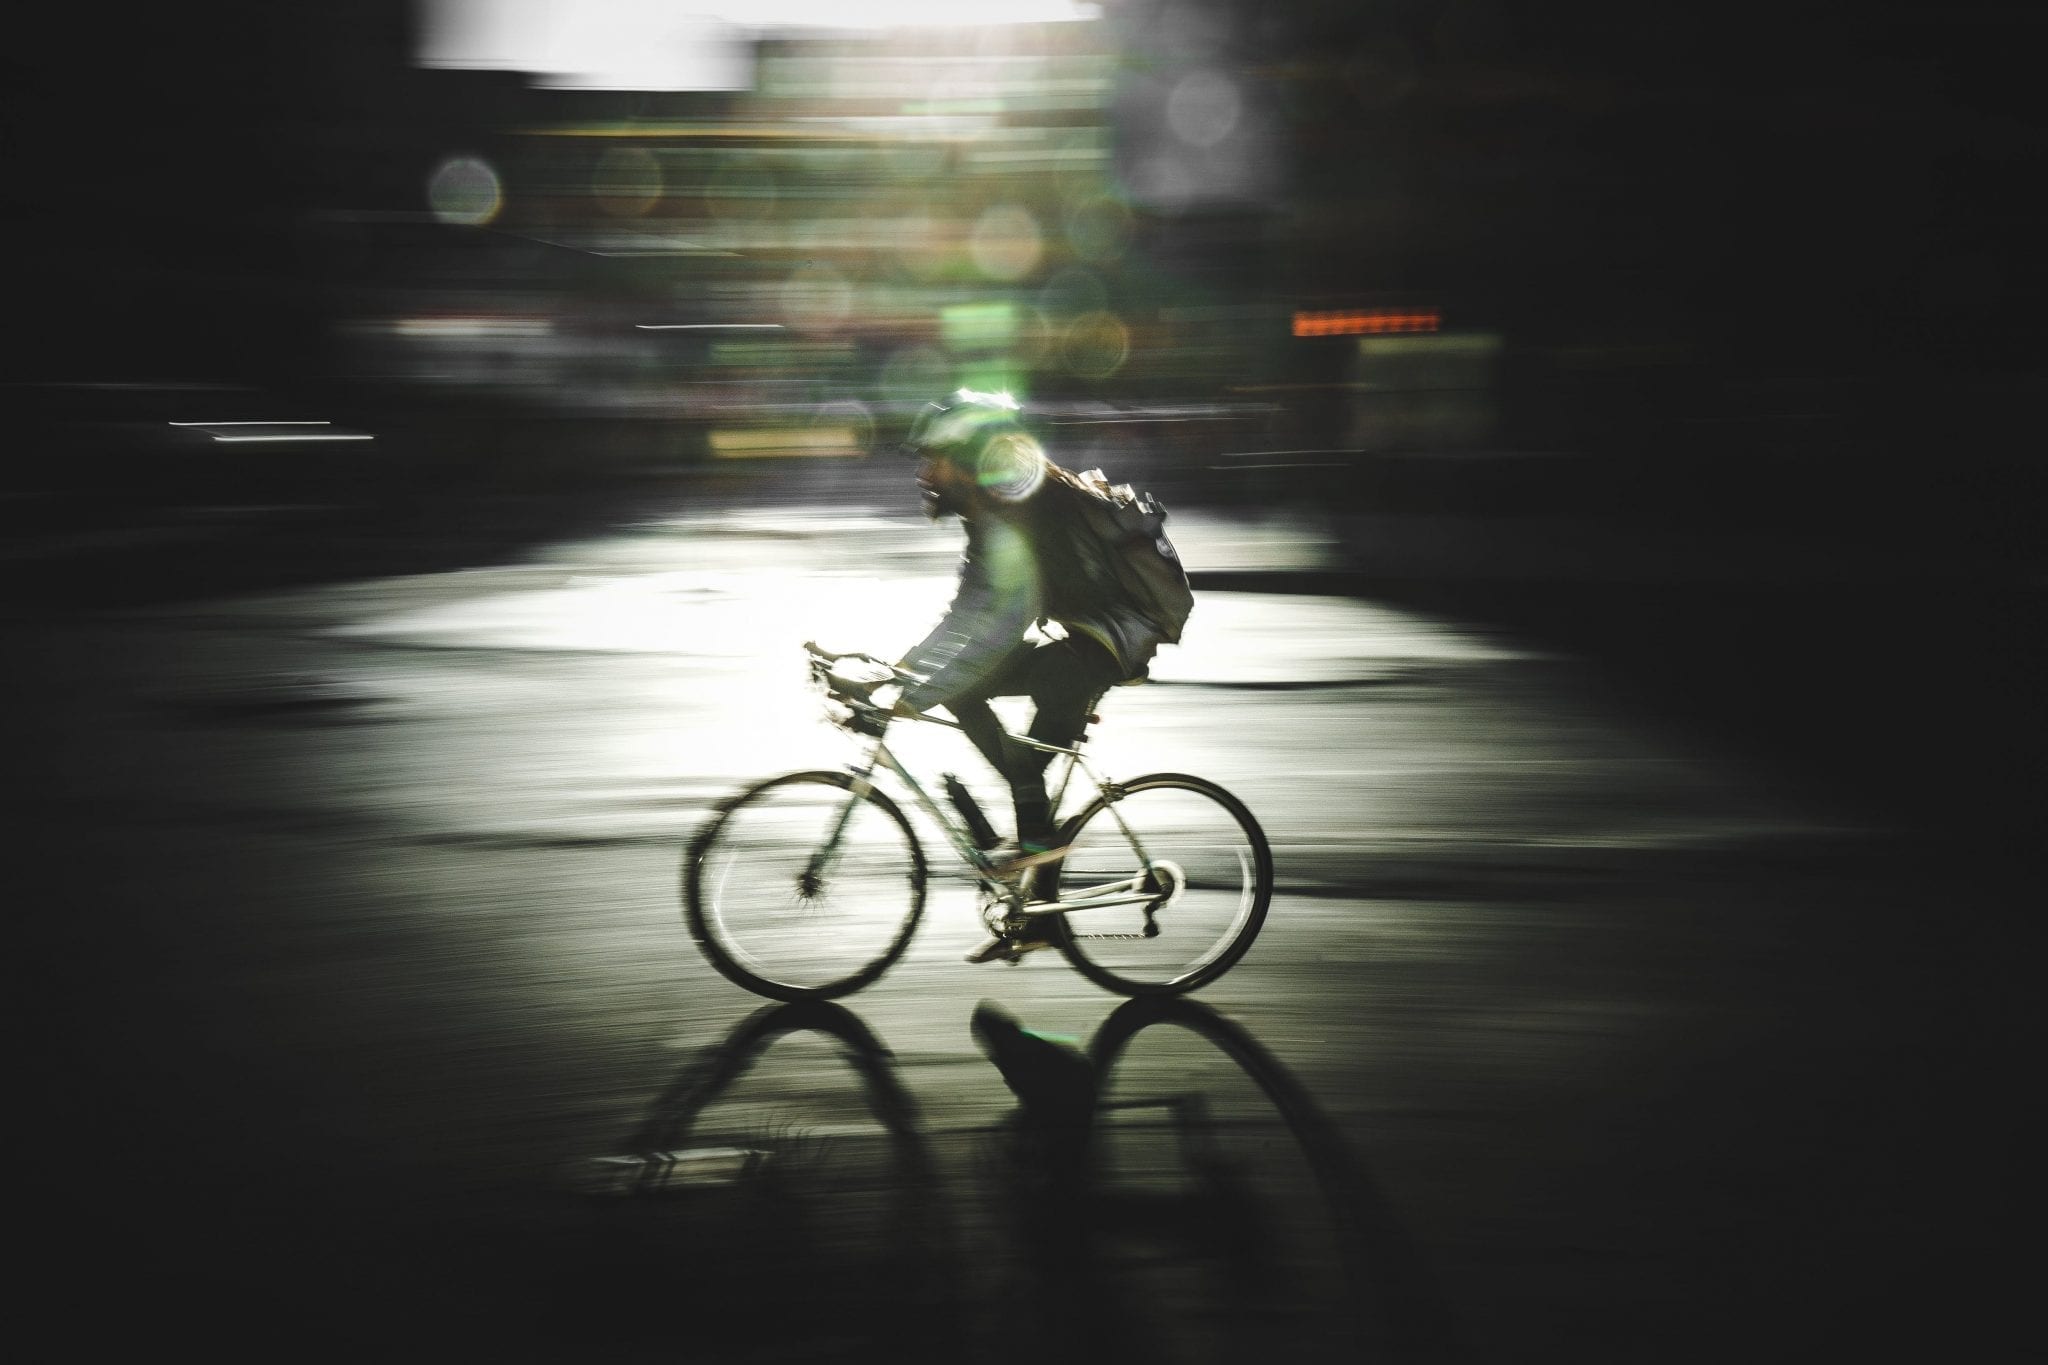 Man on bicycle; image by S (@projct33), via Unsplash.com.